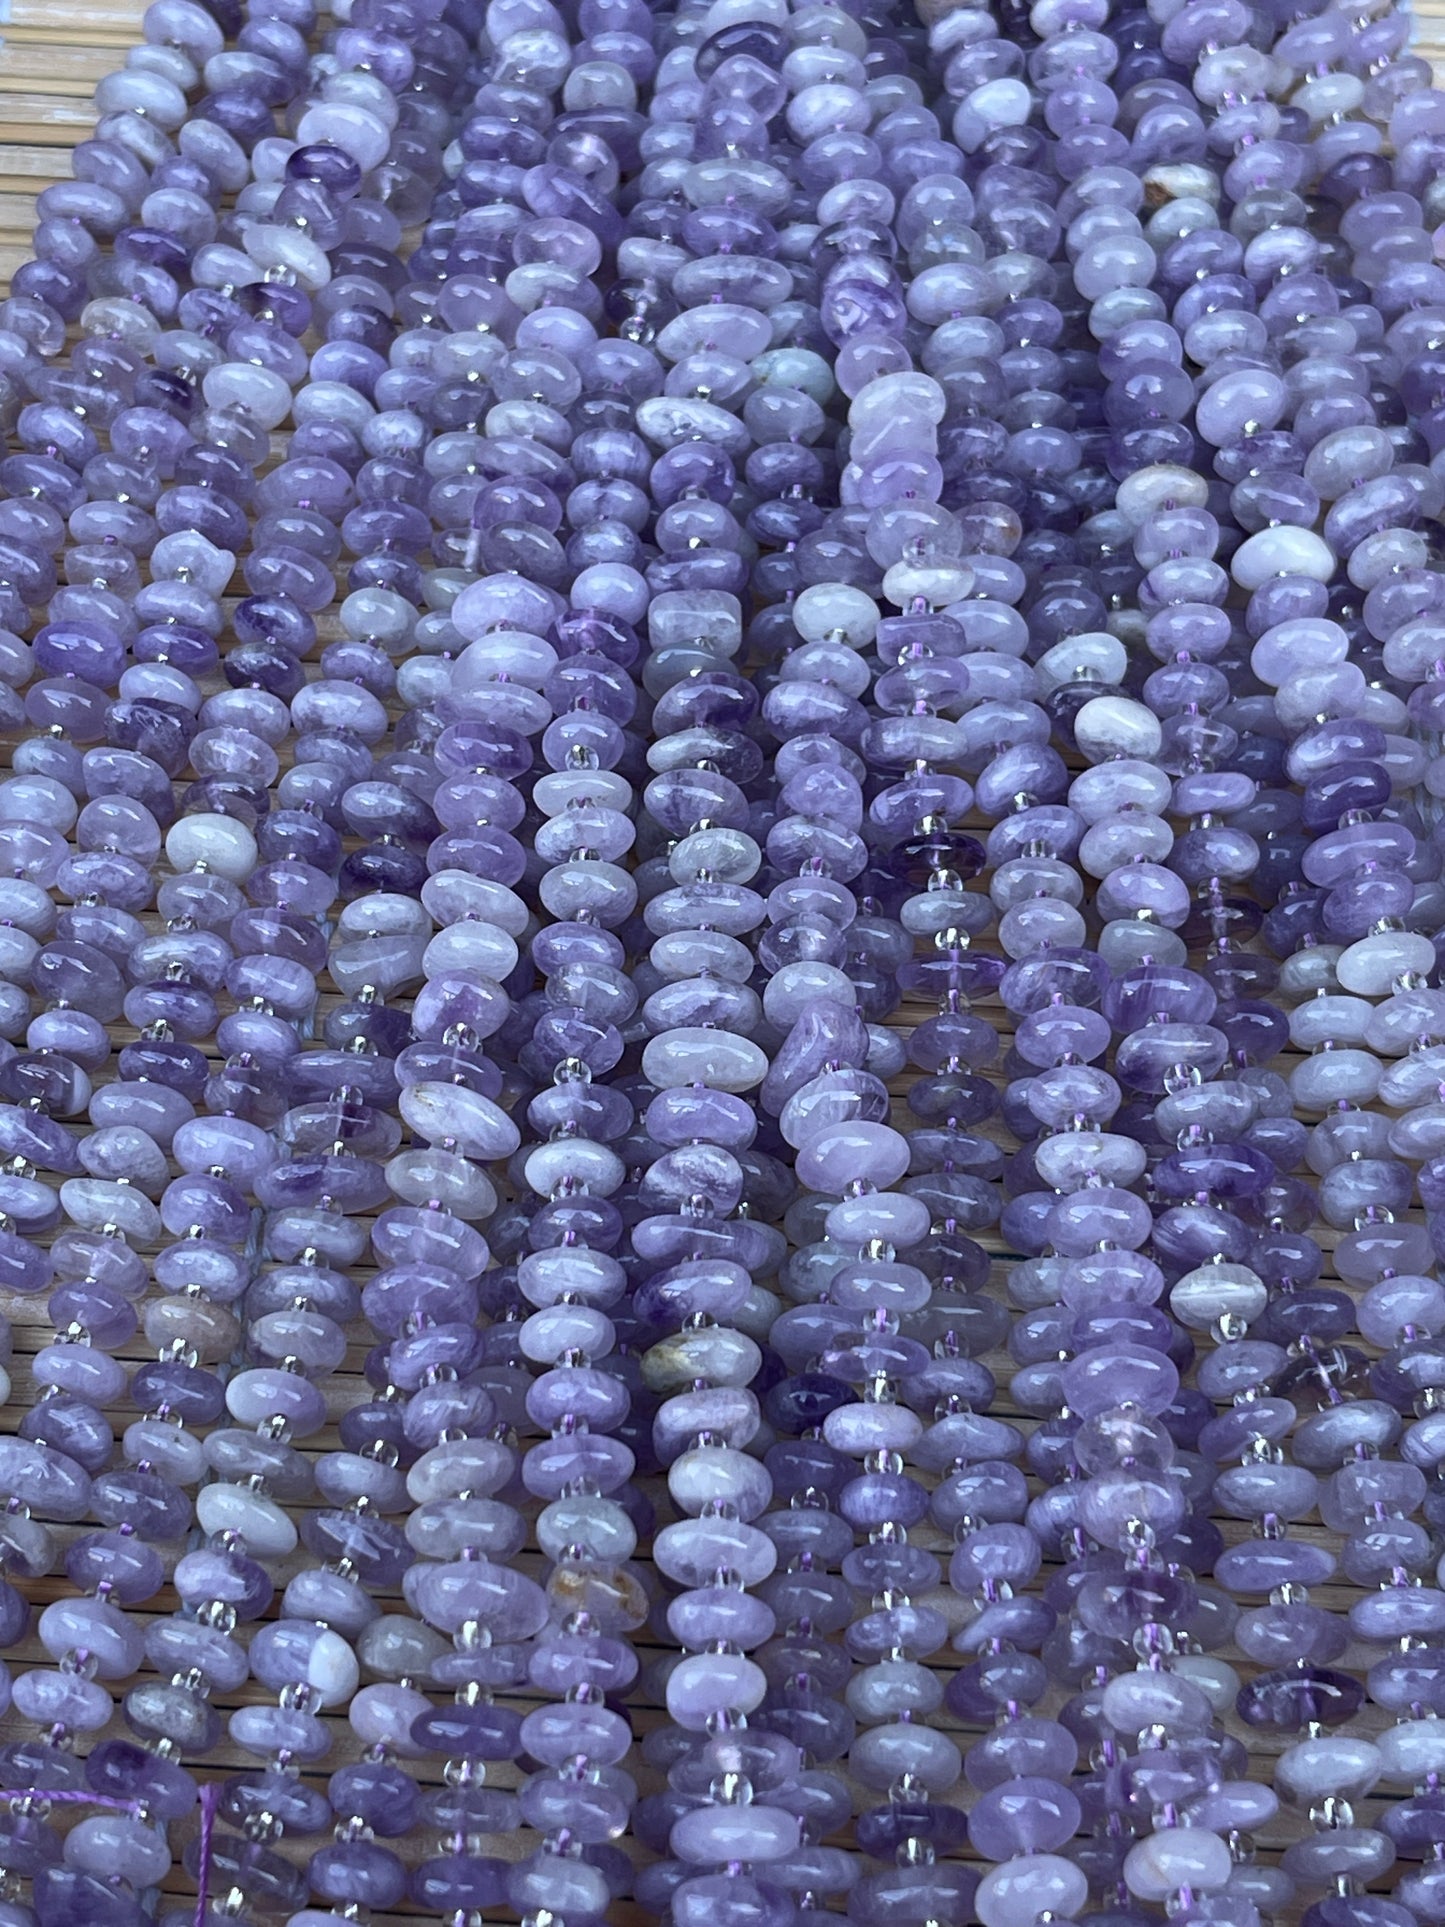 Lavender Amethyst